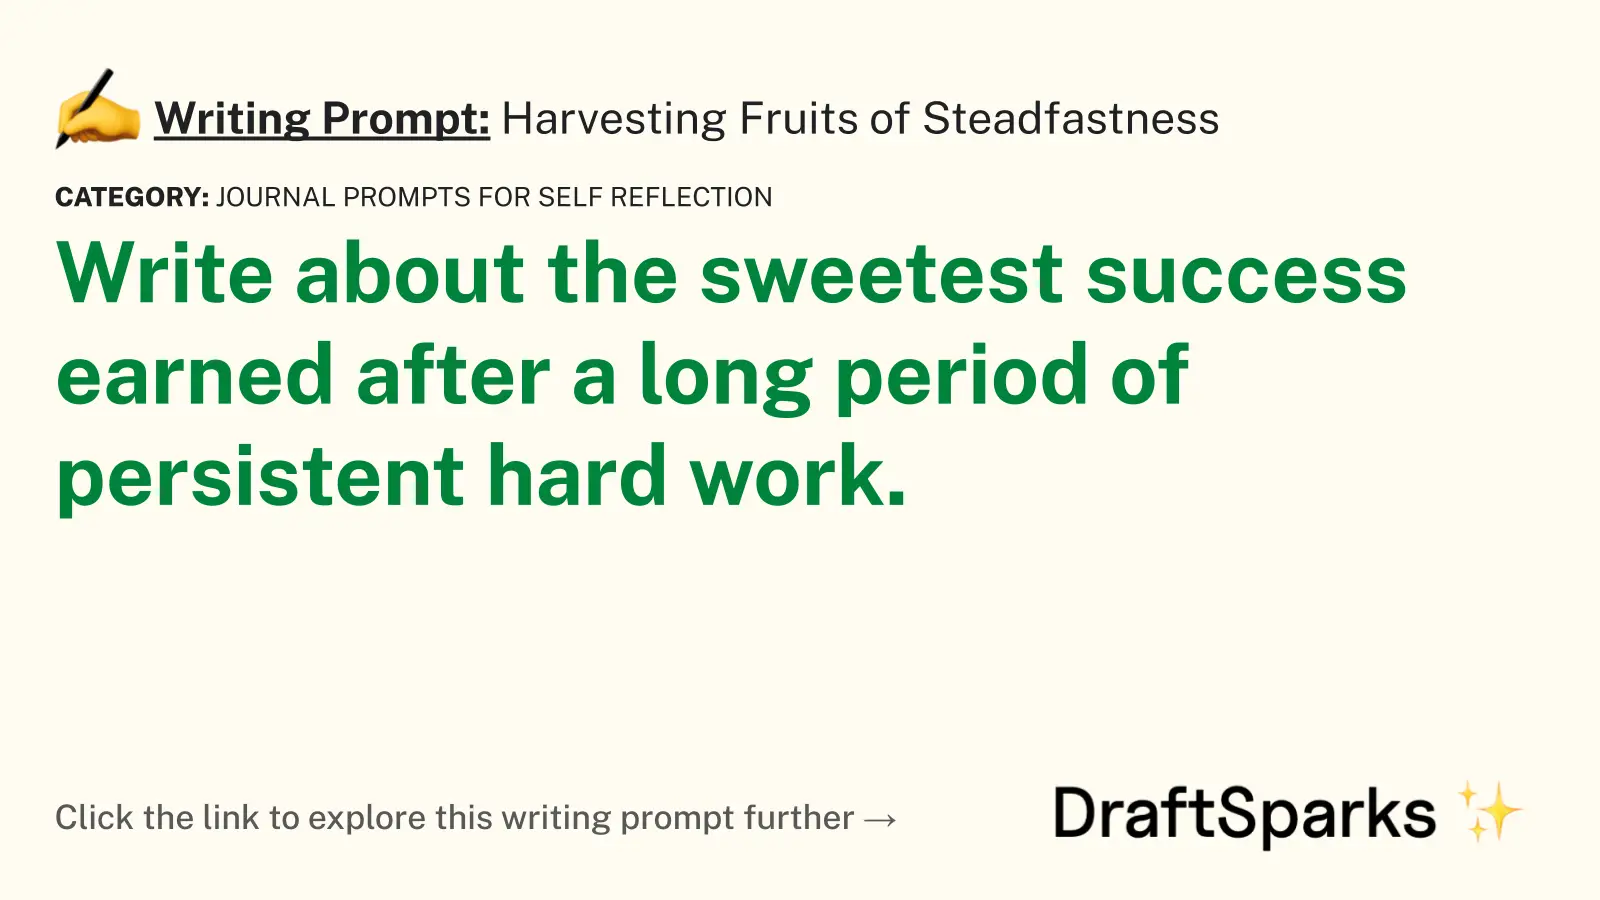 Harvesting Fruits of Steadfastness